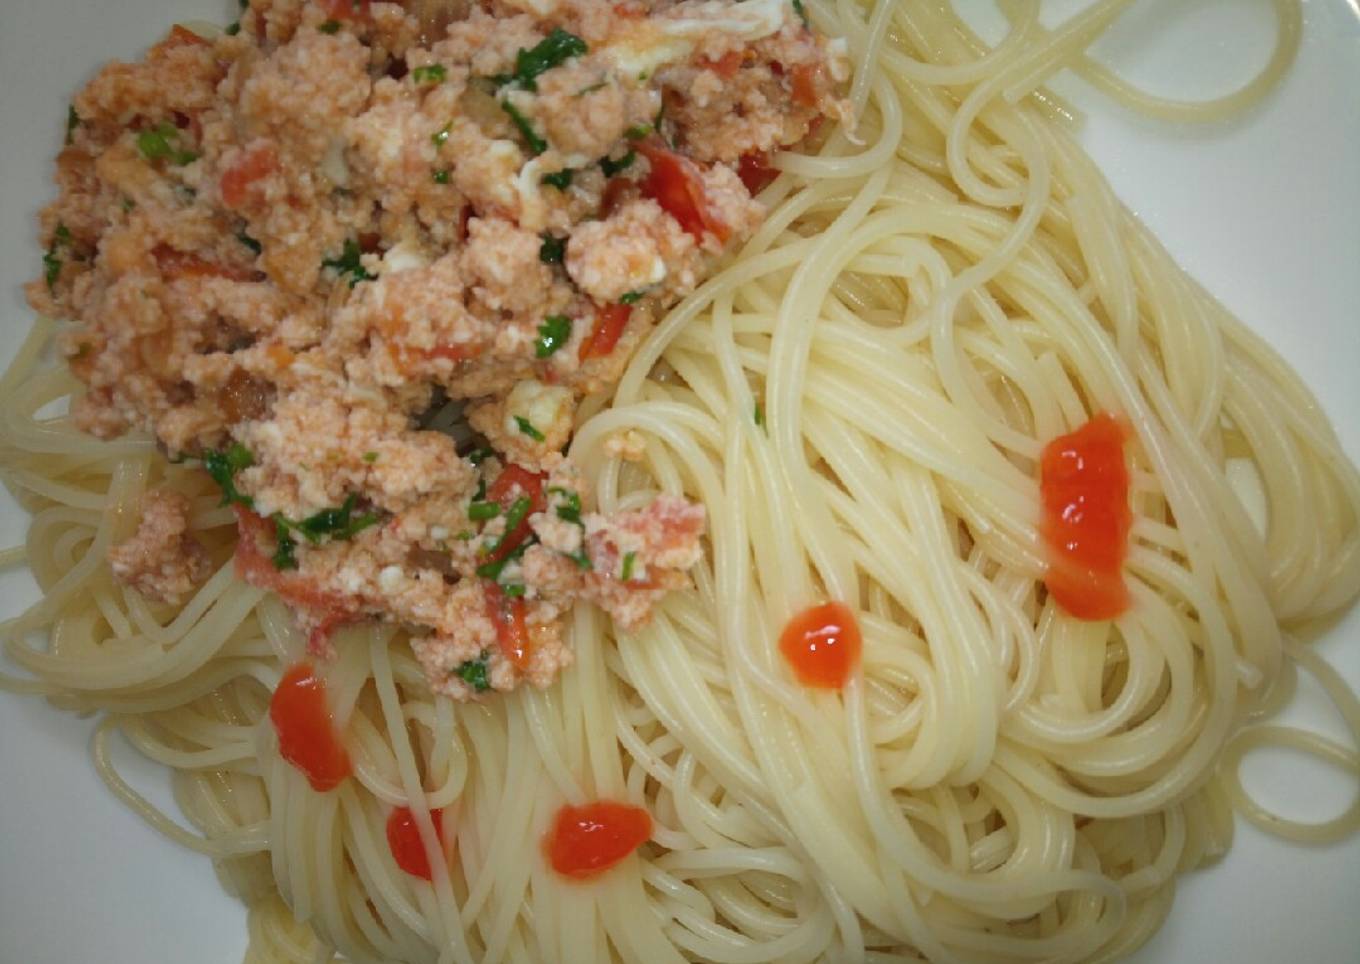 Spaghetti served with scrambled eggs